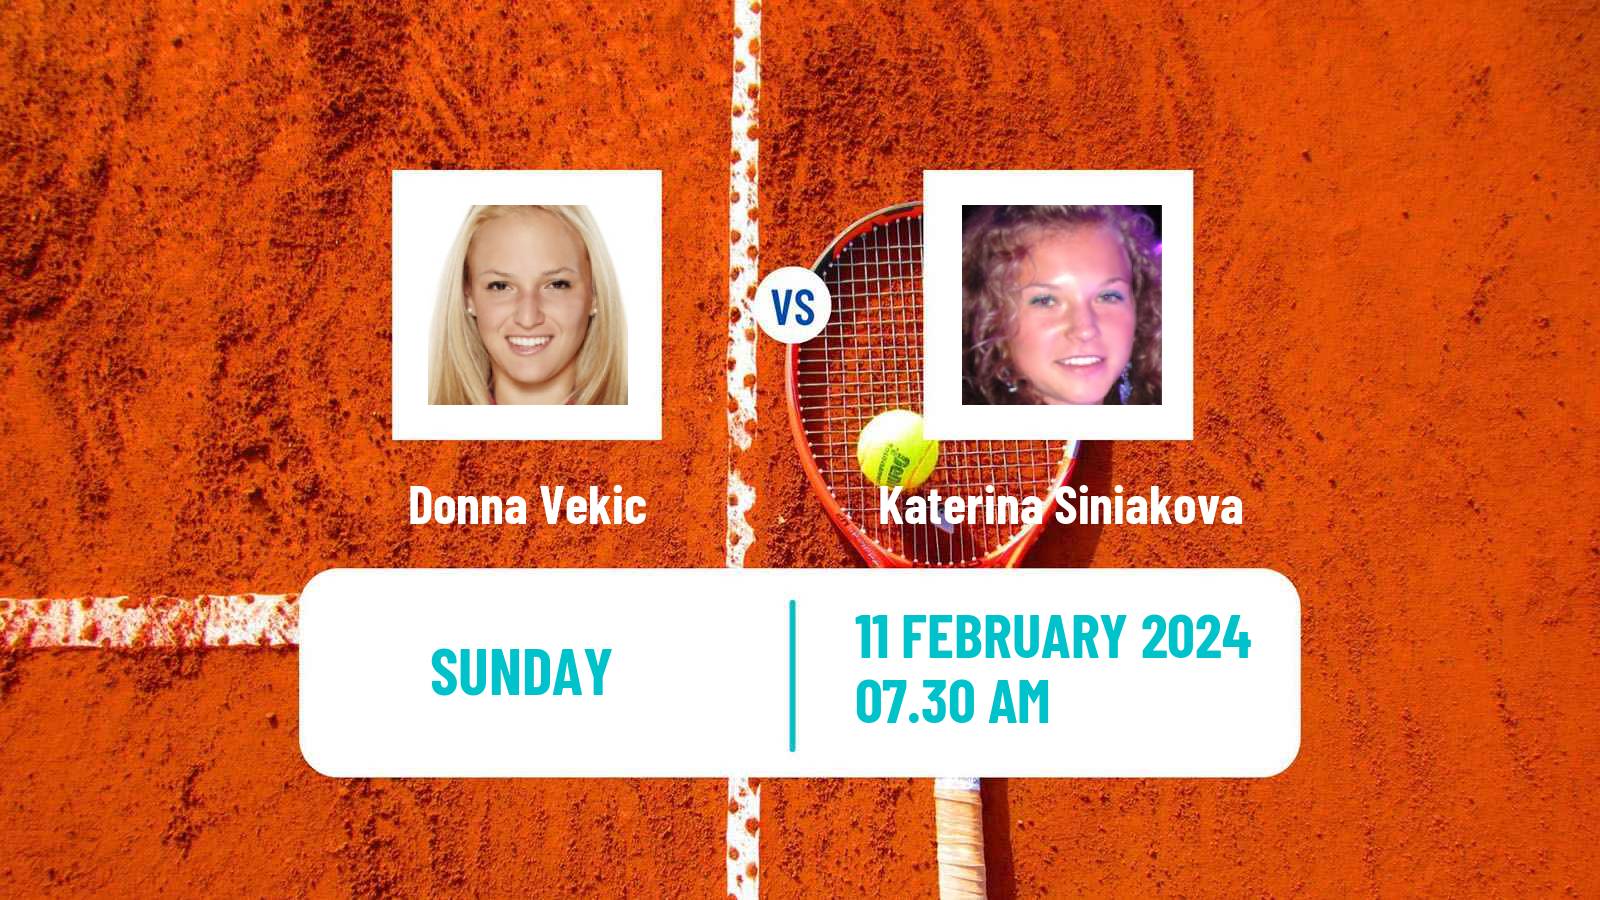 Tennis WTA Doha Donna Vekic - Katerina Siniakova